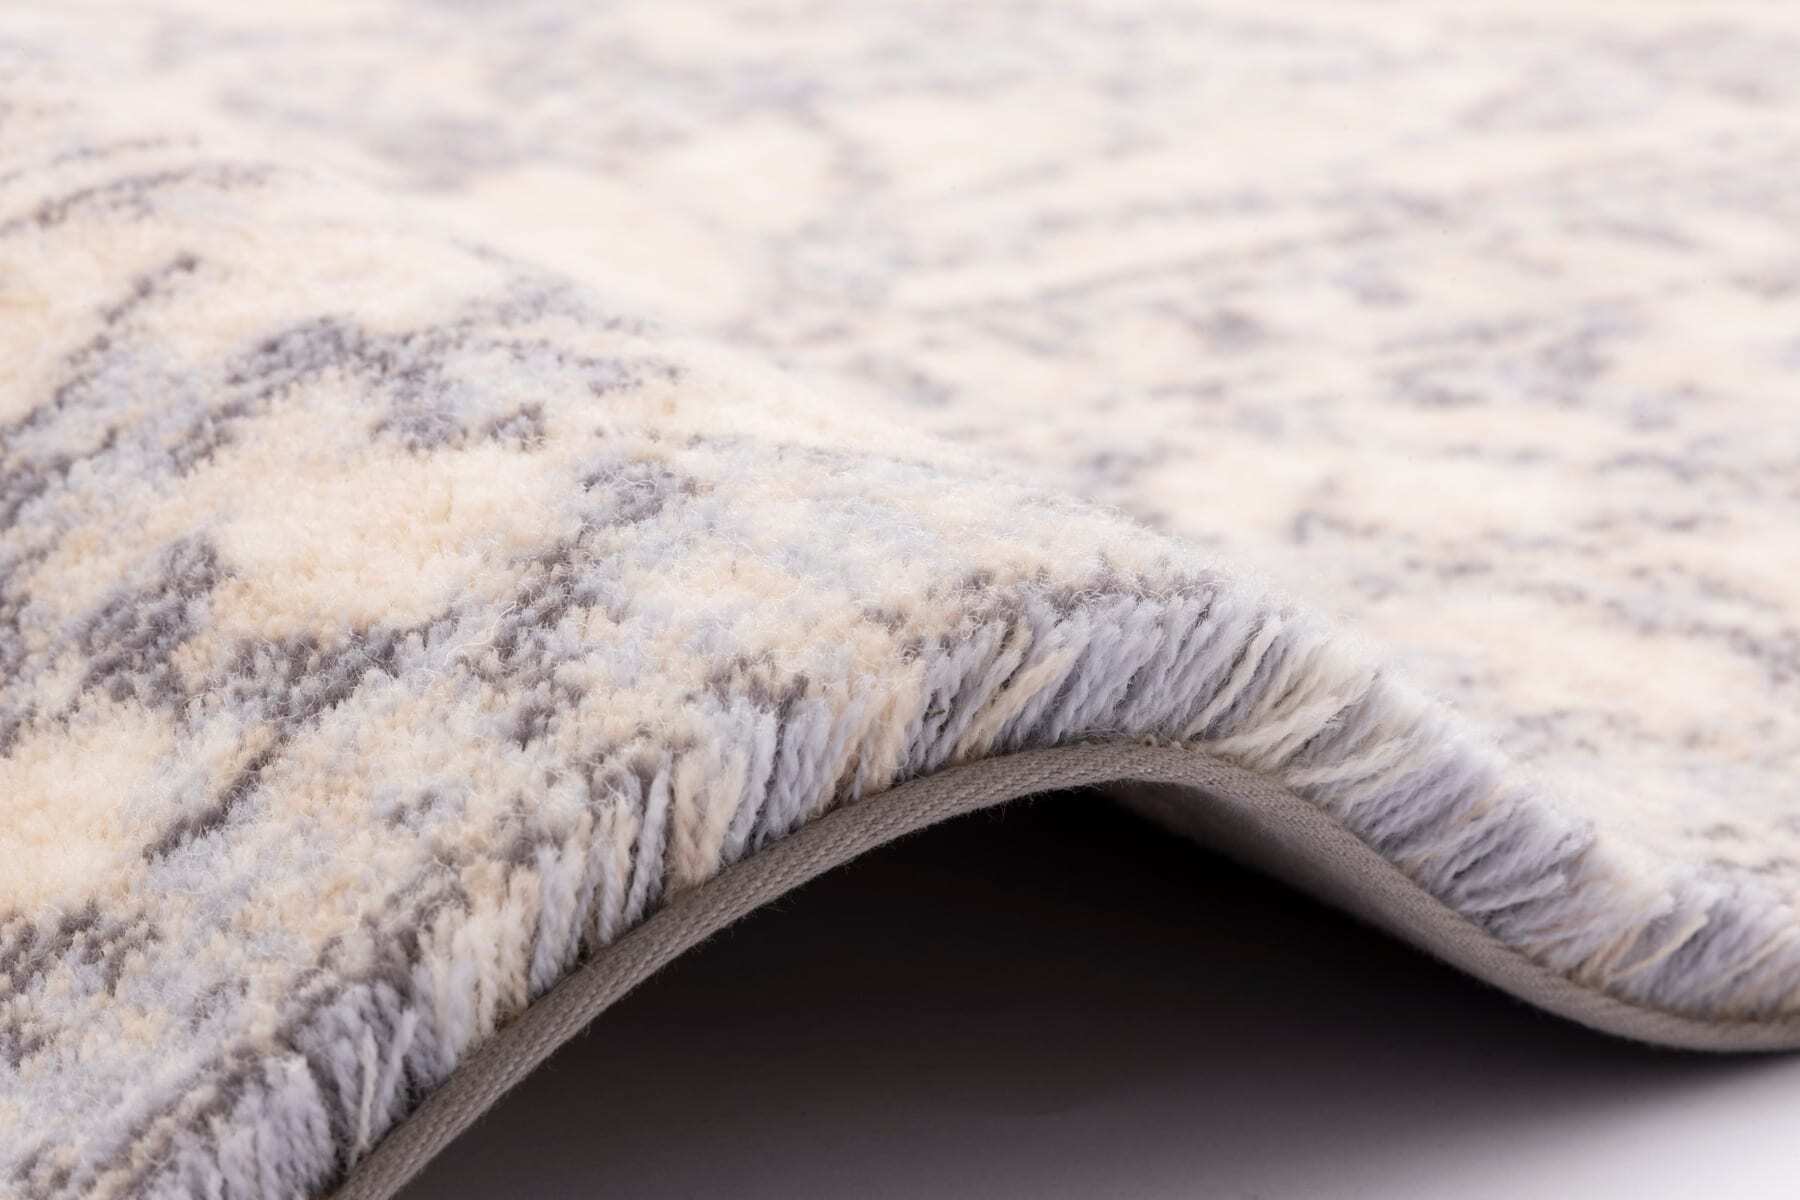 Yoko Alabaster rug by Agnella